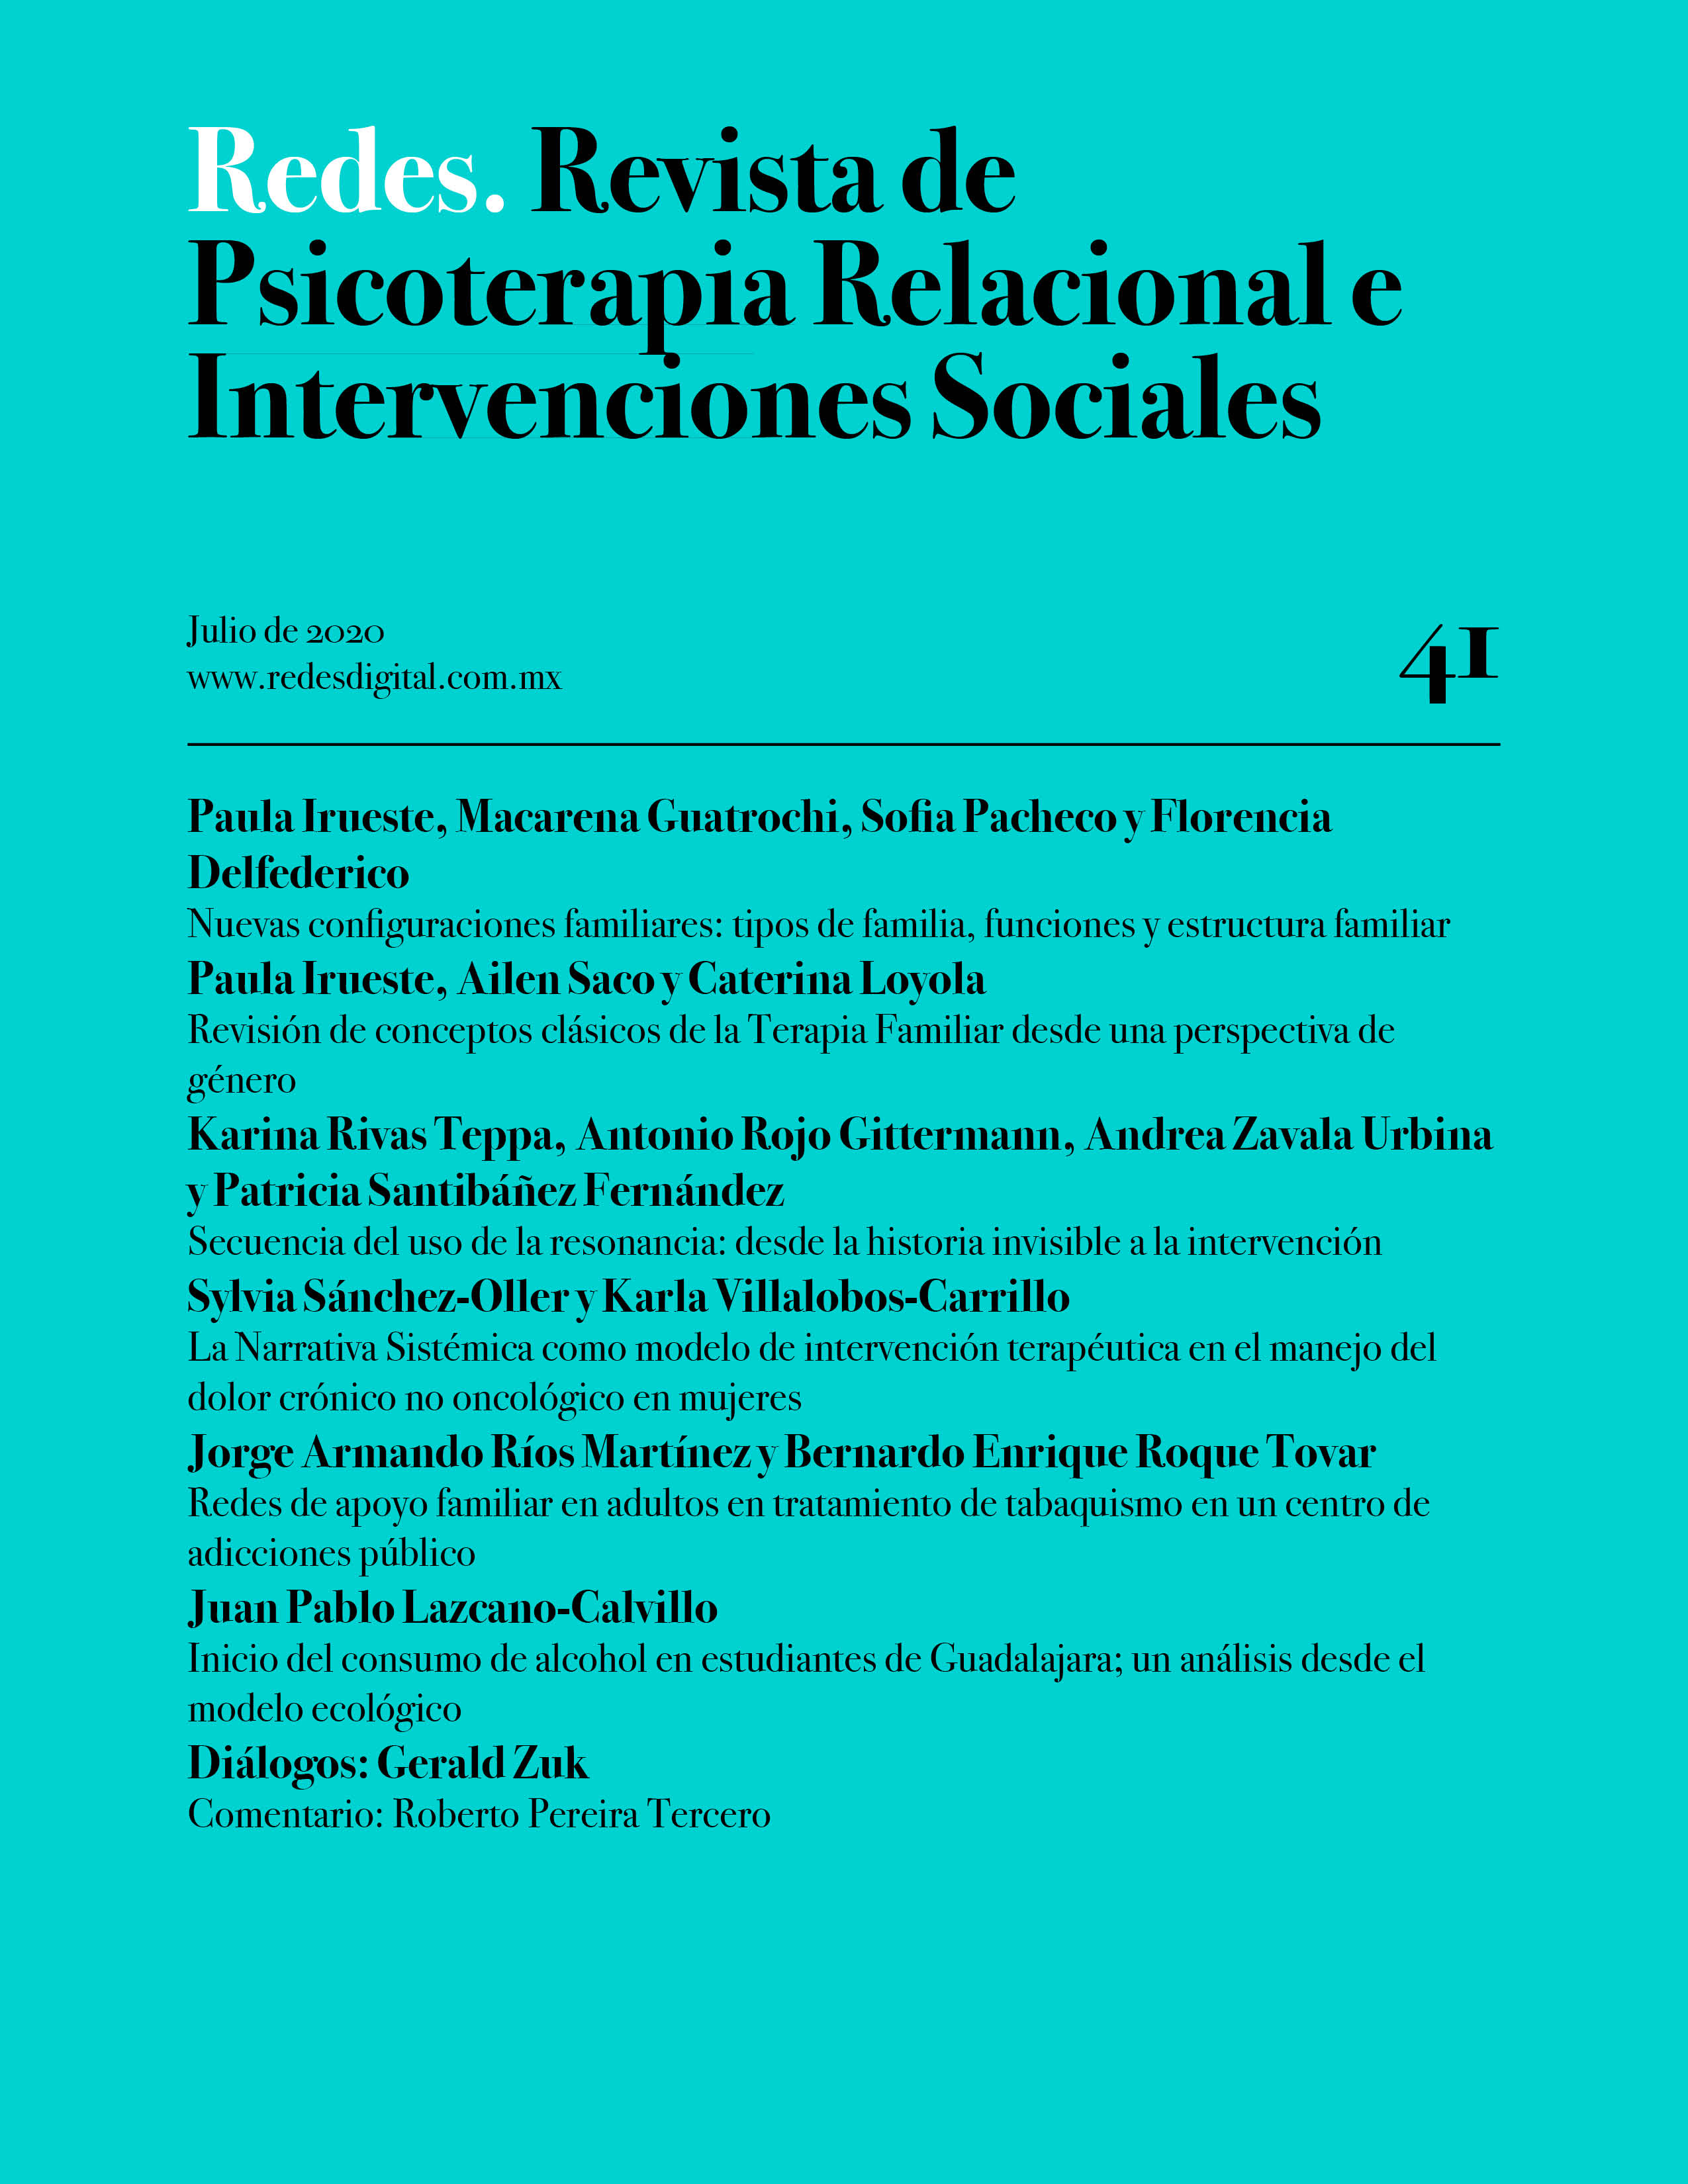 					Ver Núm. 41 (2020): Redes. Revista de Psicoterapia Relacional e Intervenciones Sociales. Julio, 2020
				